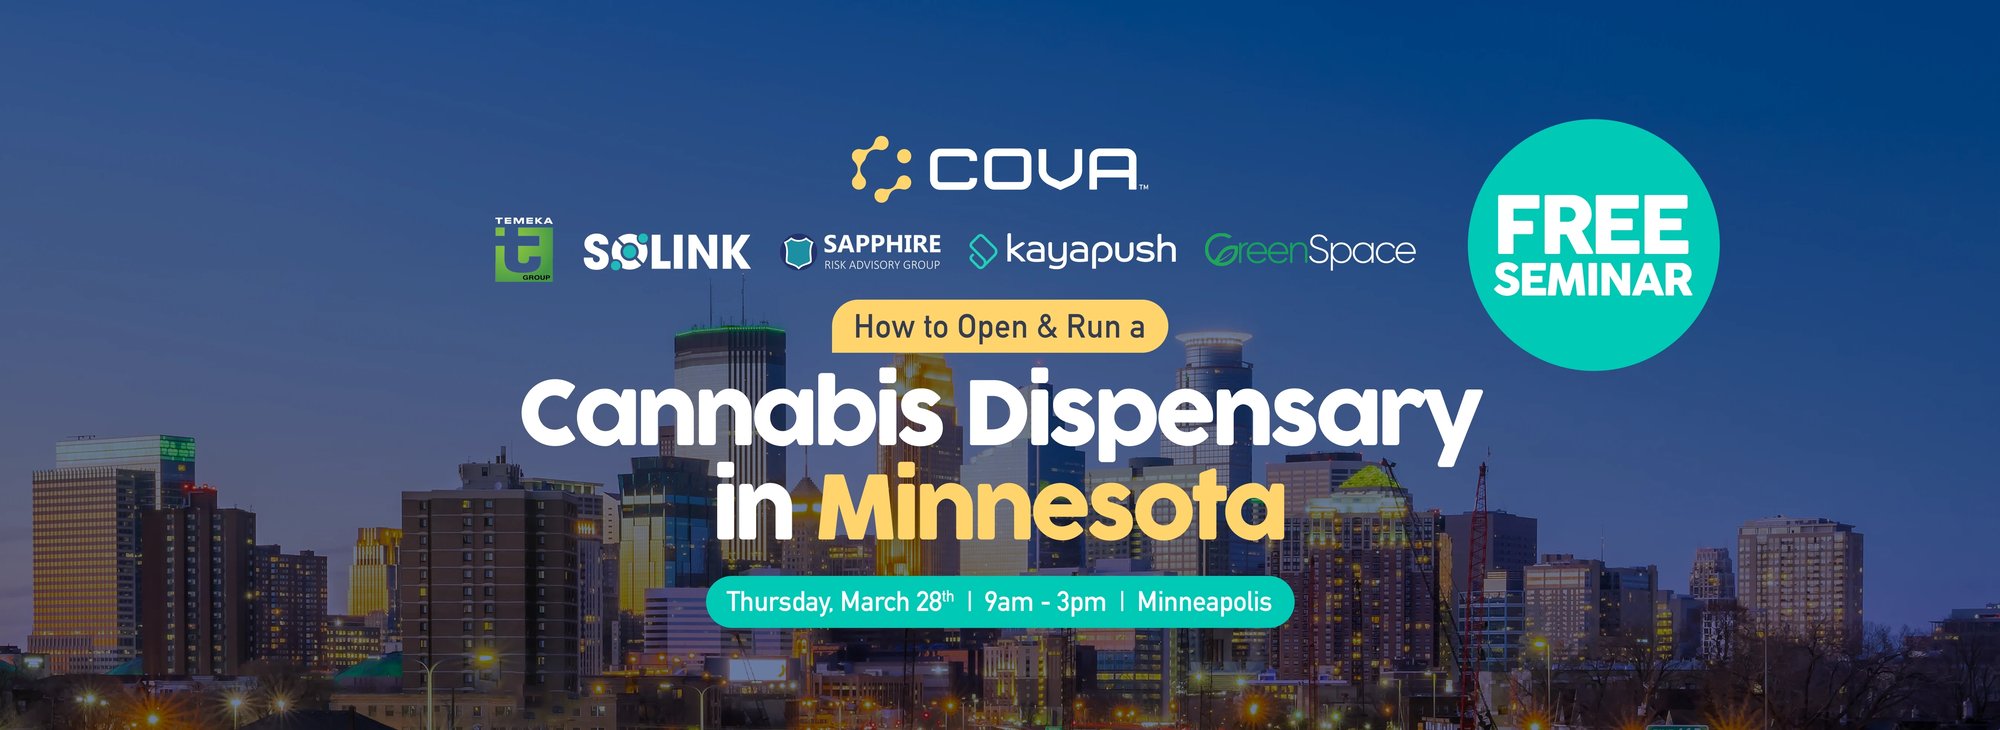 Cova-Seminar-Minnesota_Desktop-Banner_V2